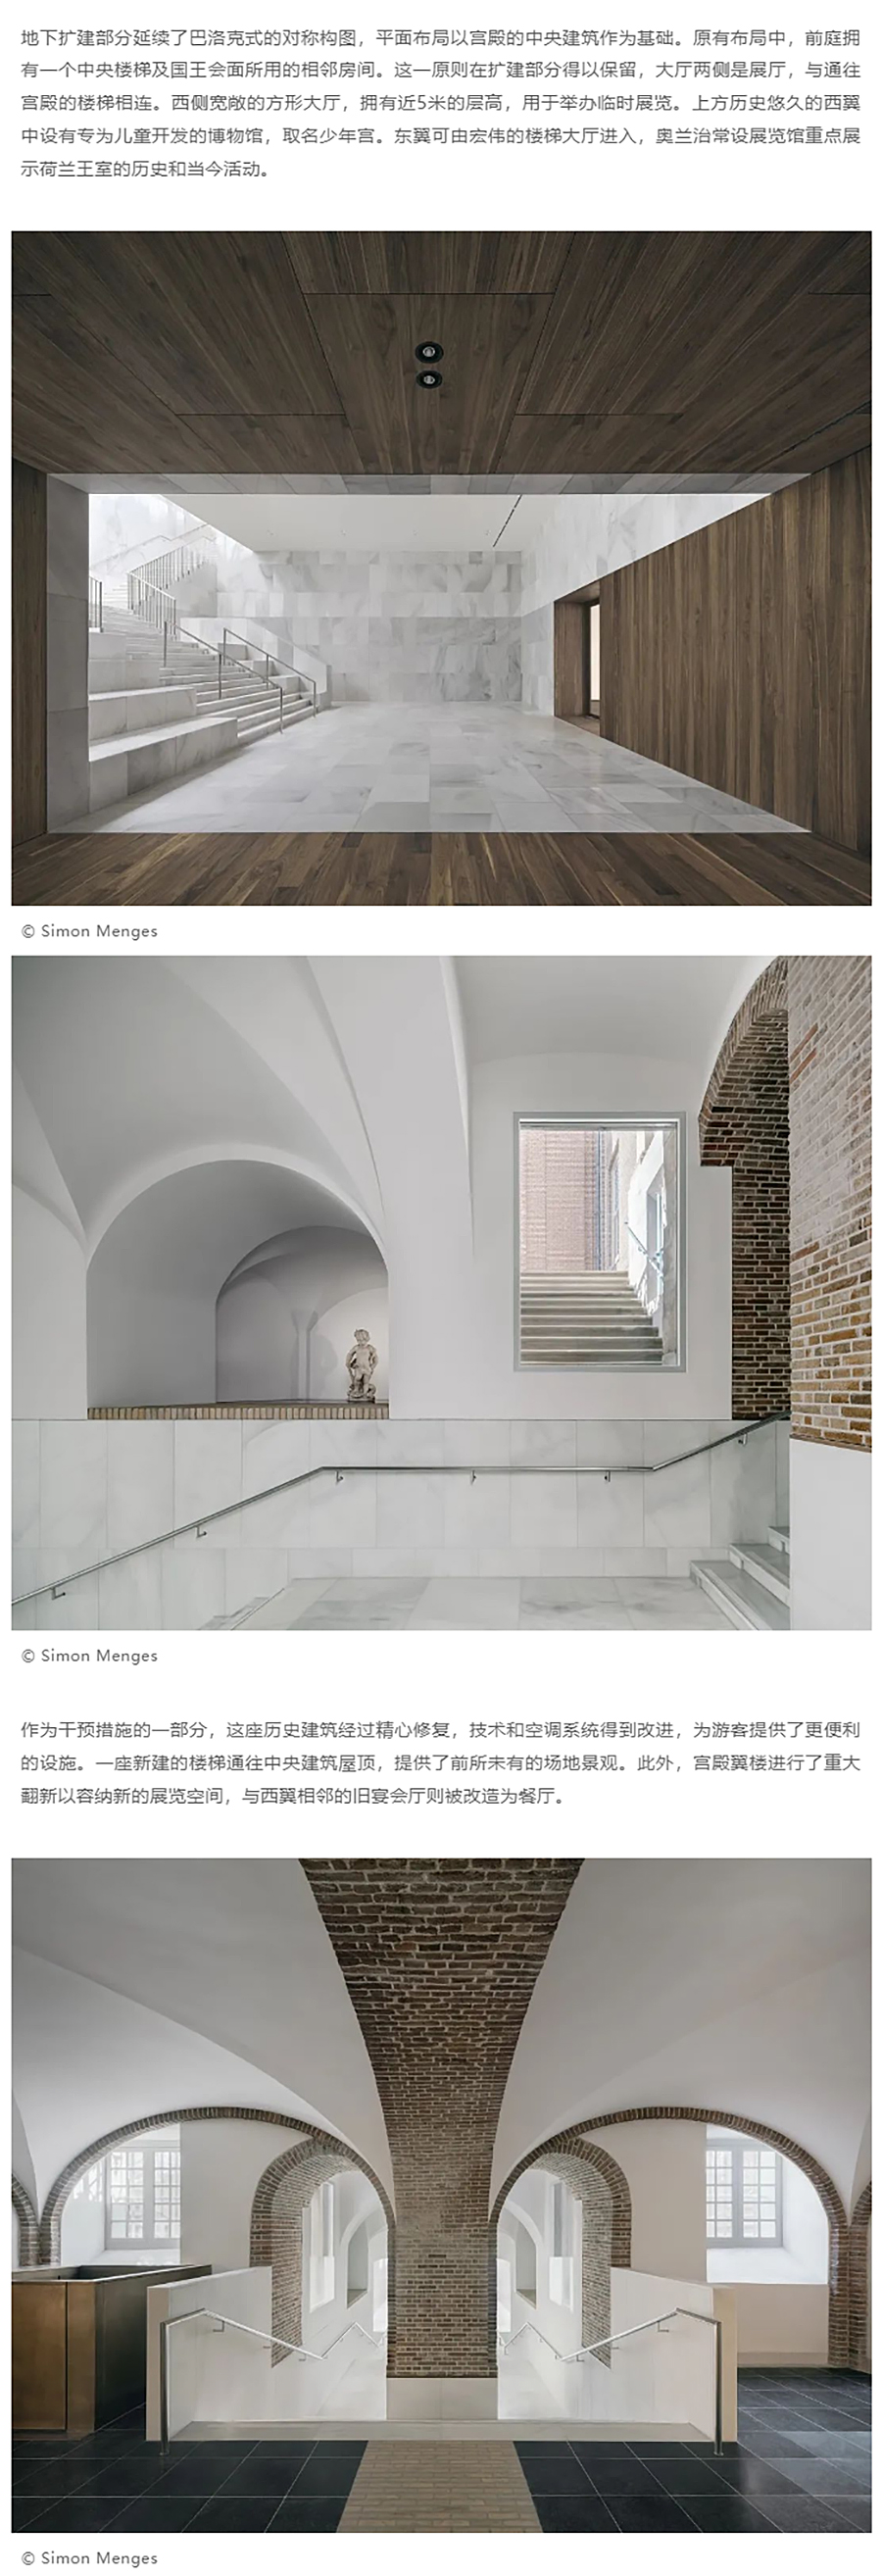 Renewal-Zone：在荷兰，如何修复扩建一座巴洛克皇宫博物馆_0005_图层-6 拷贝.jpg